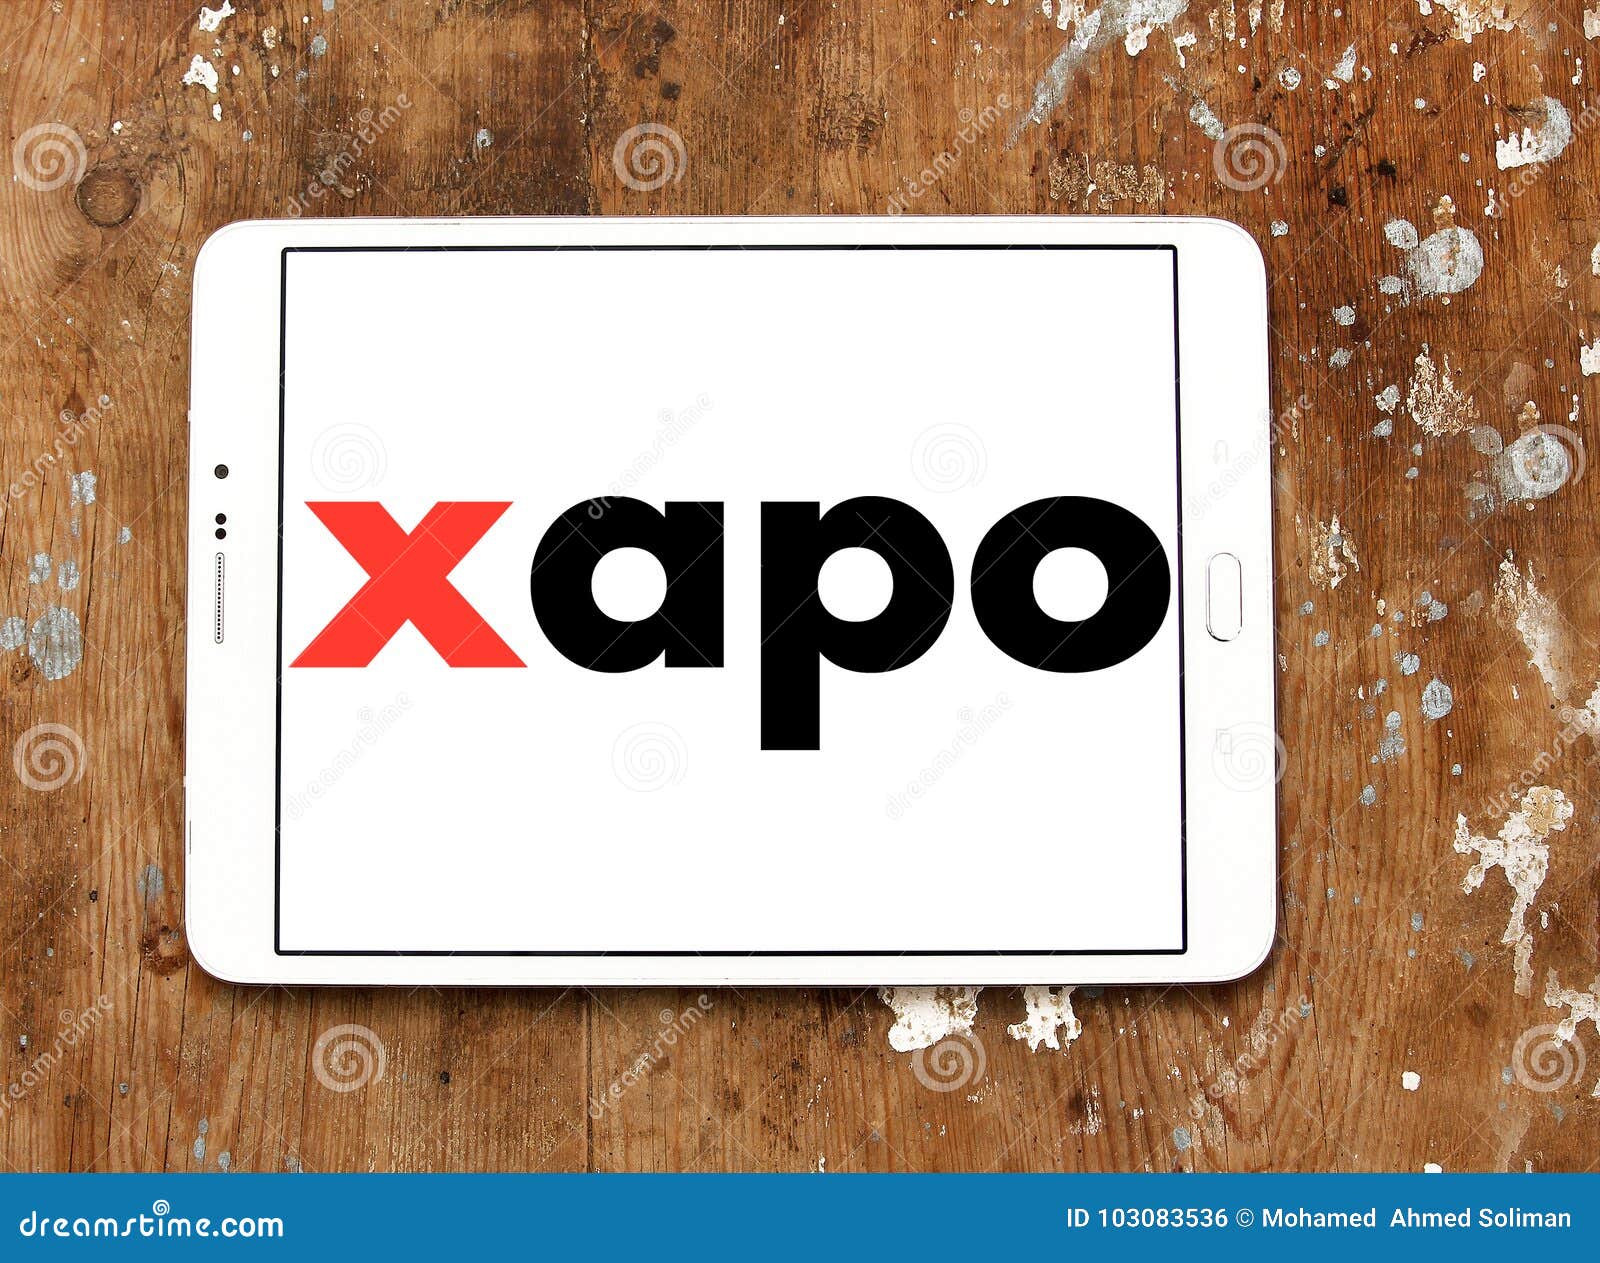 Xapo logo editorial stock photo. Image of cryptocurrency - 105606238